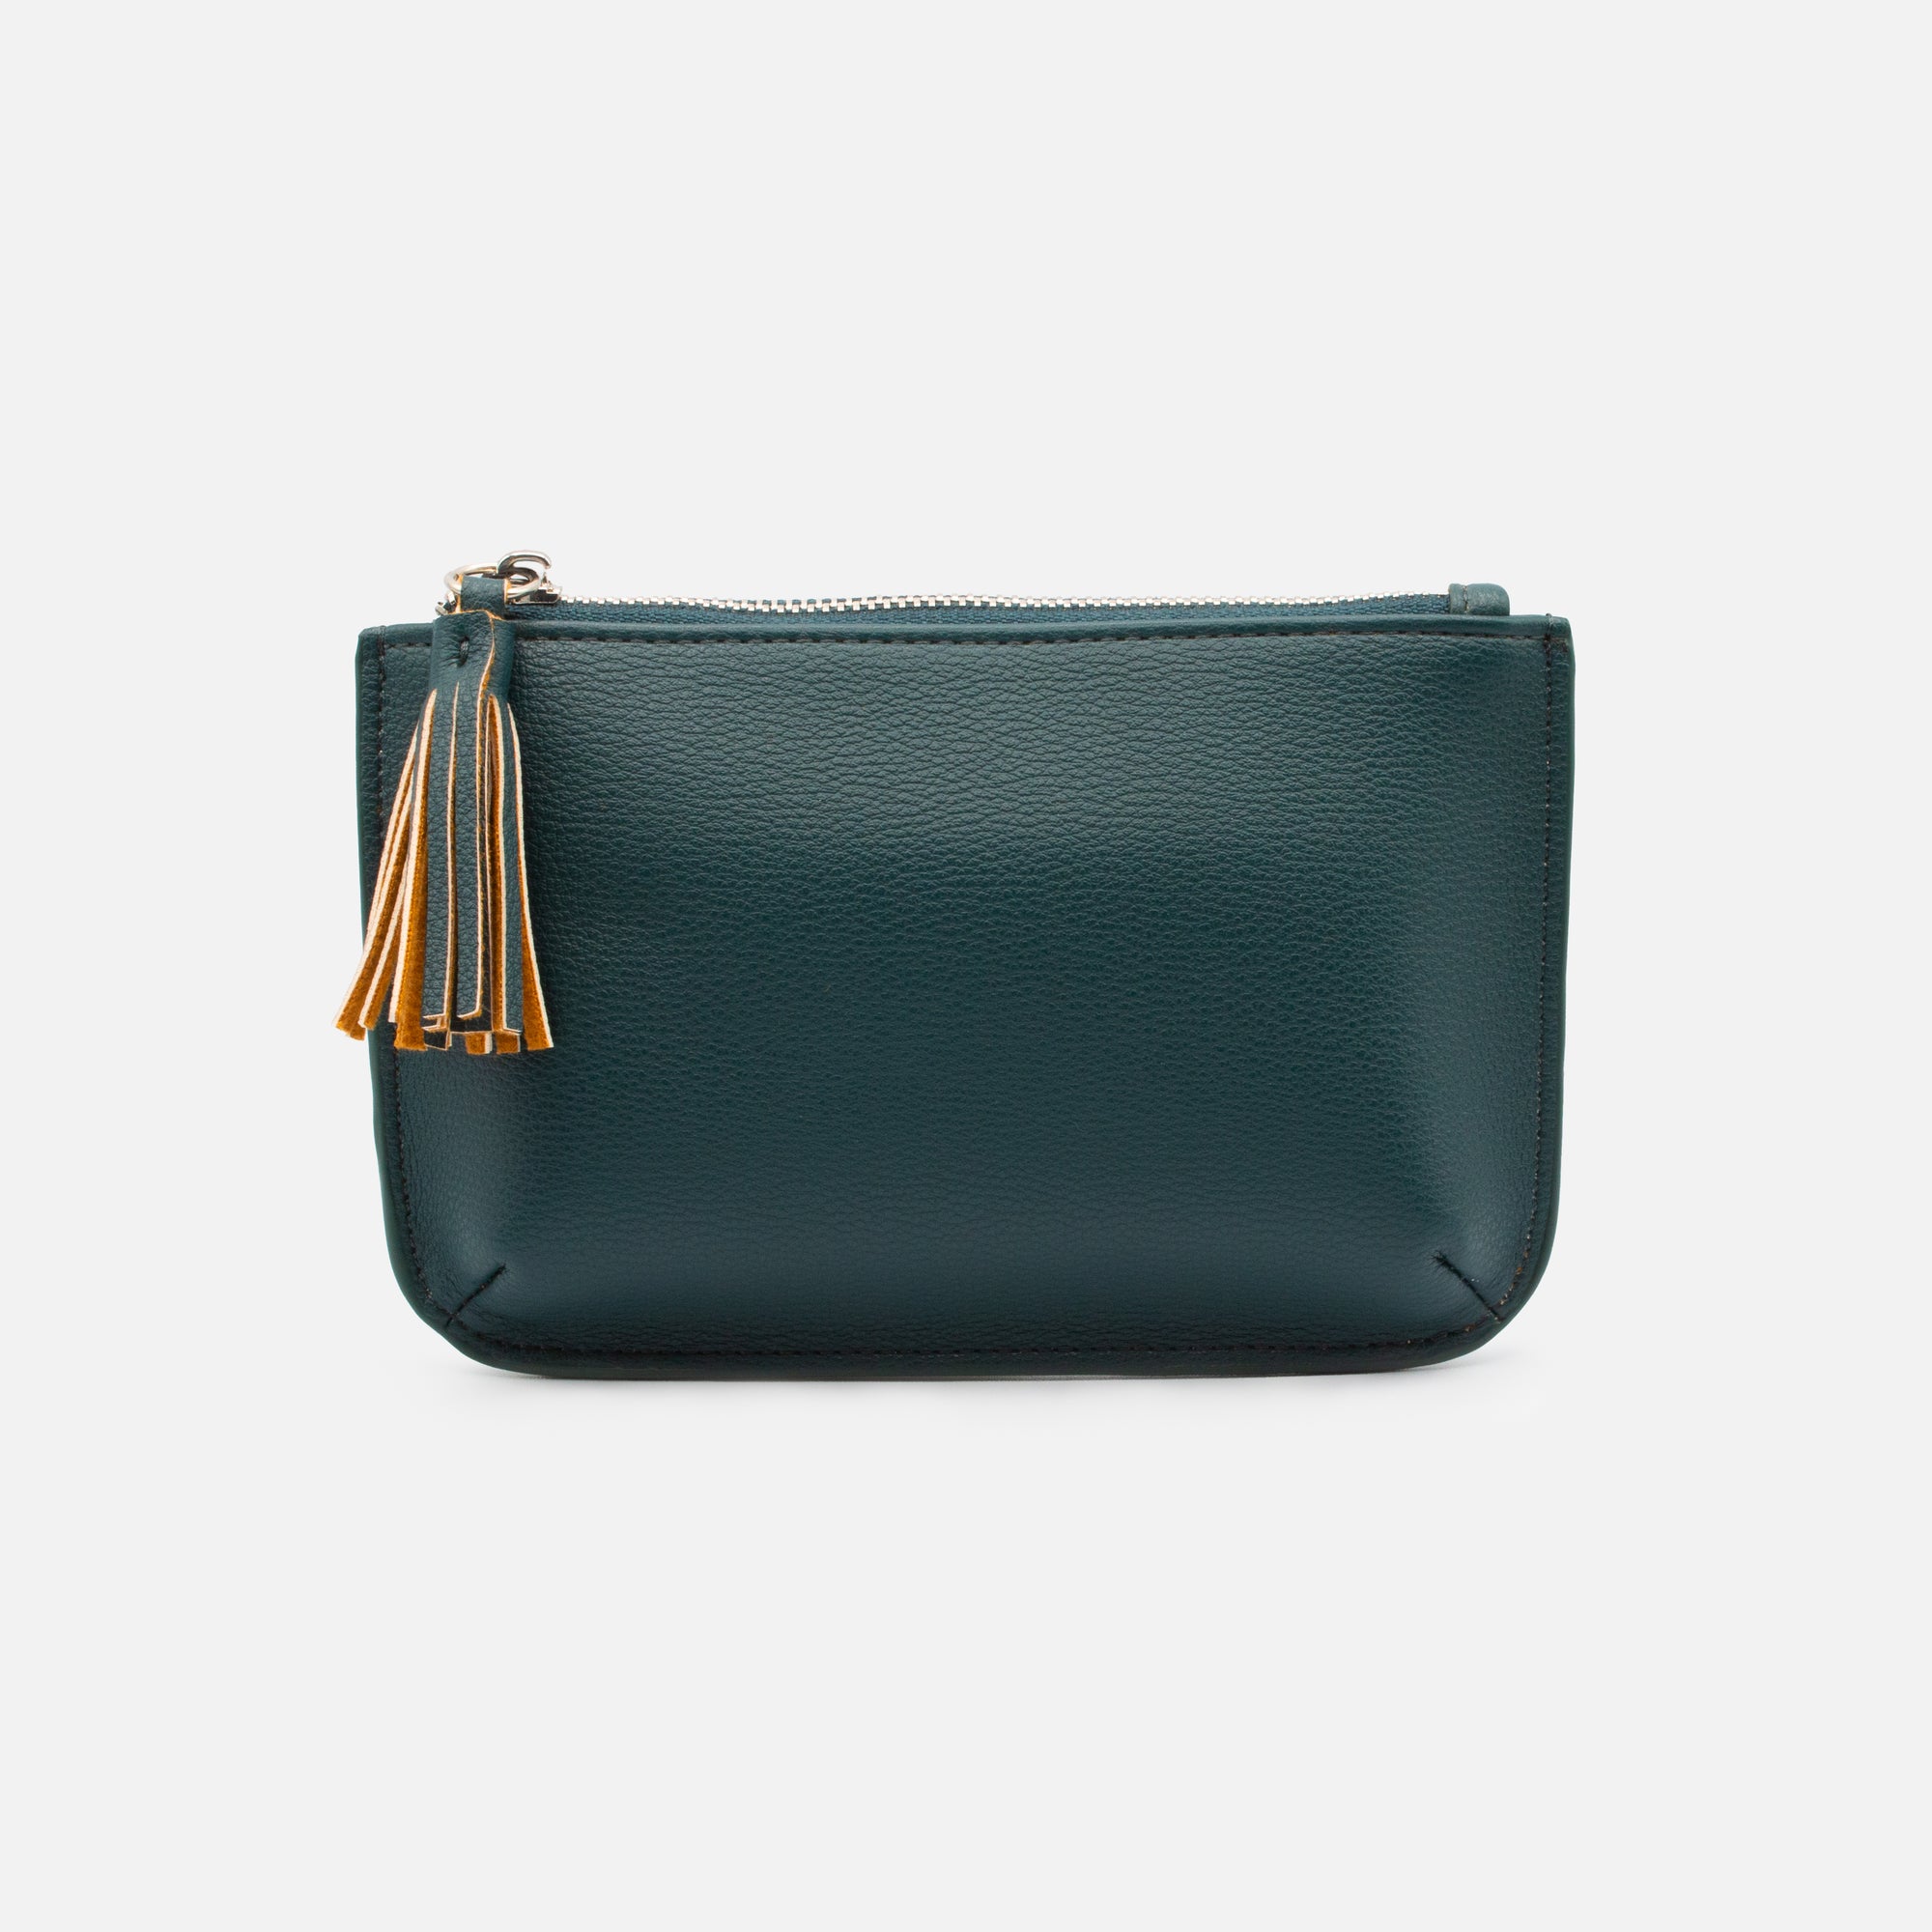 Blue-green pouch